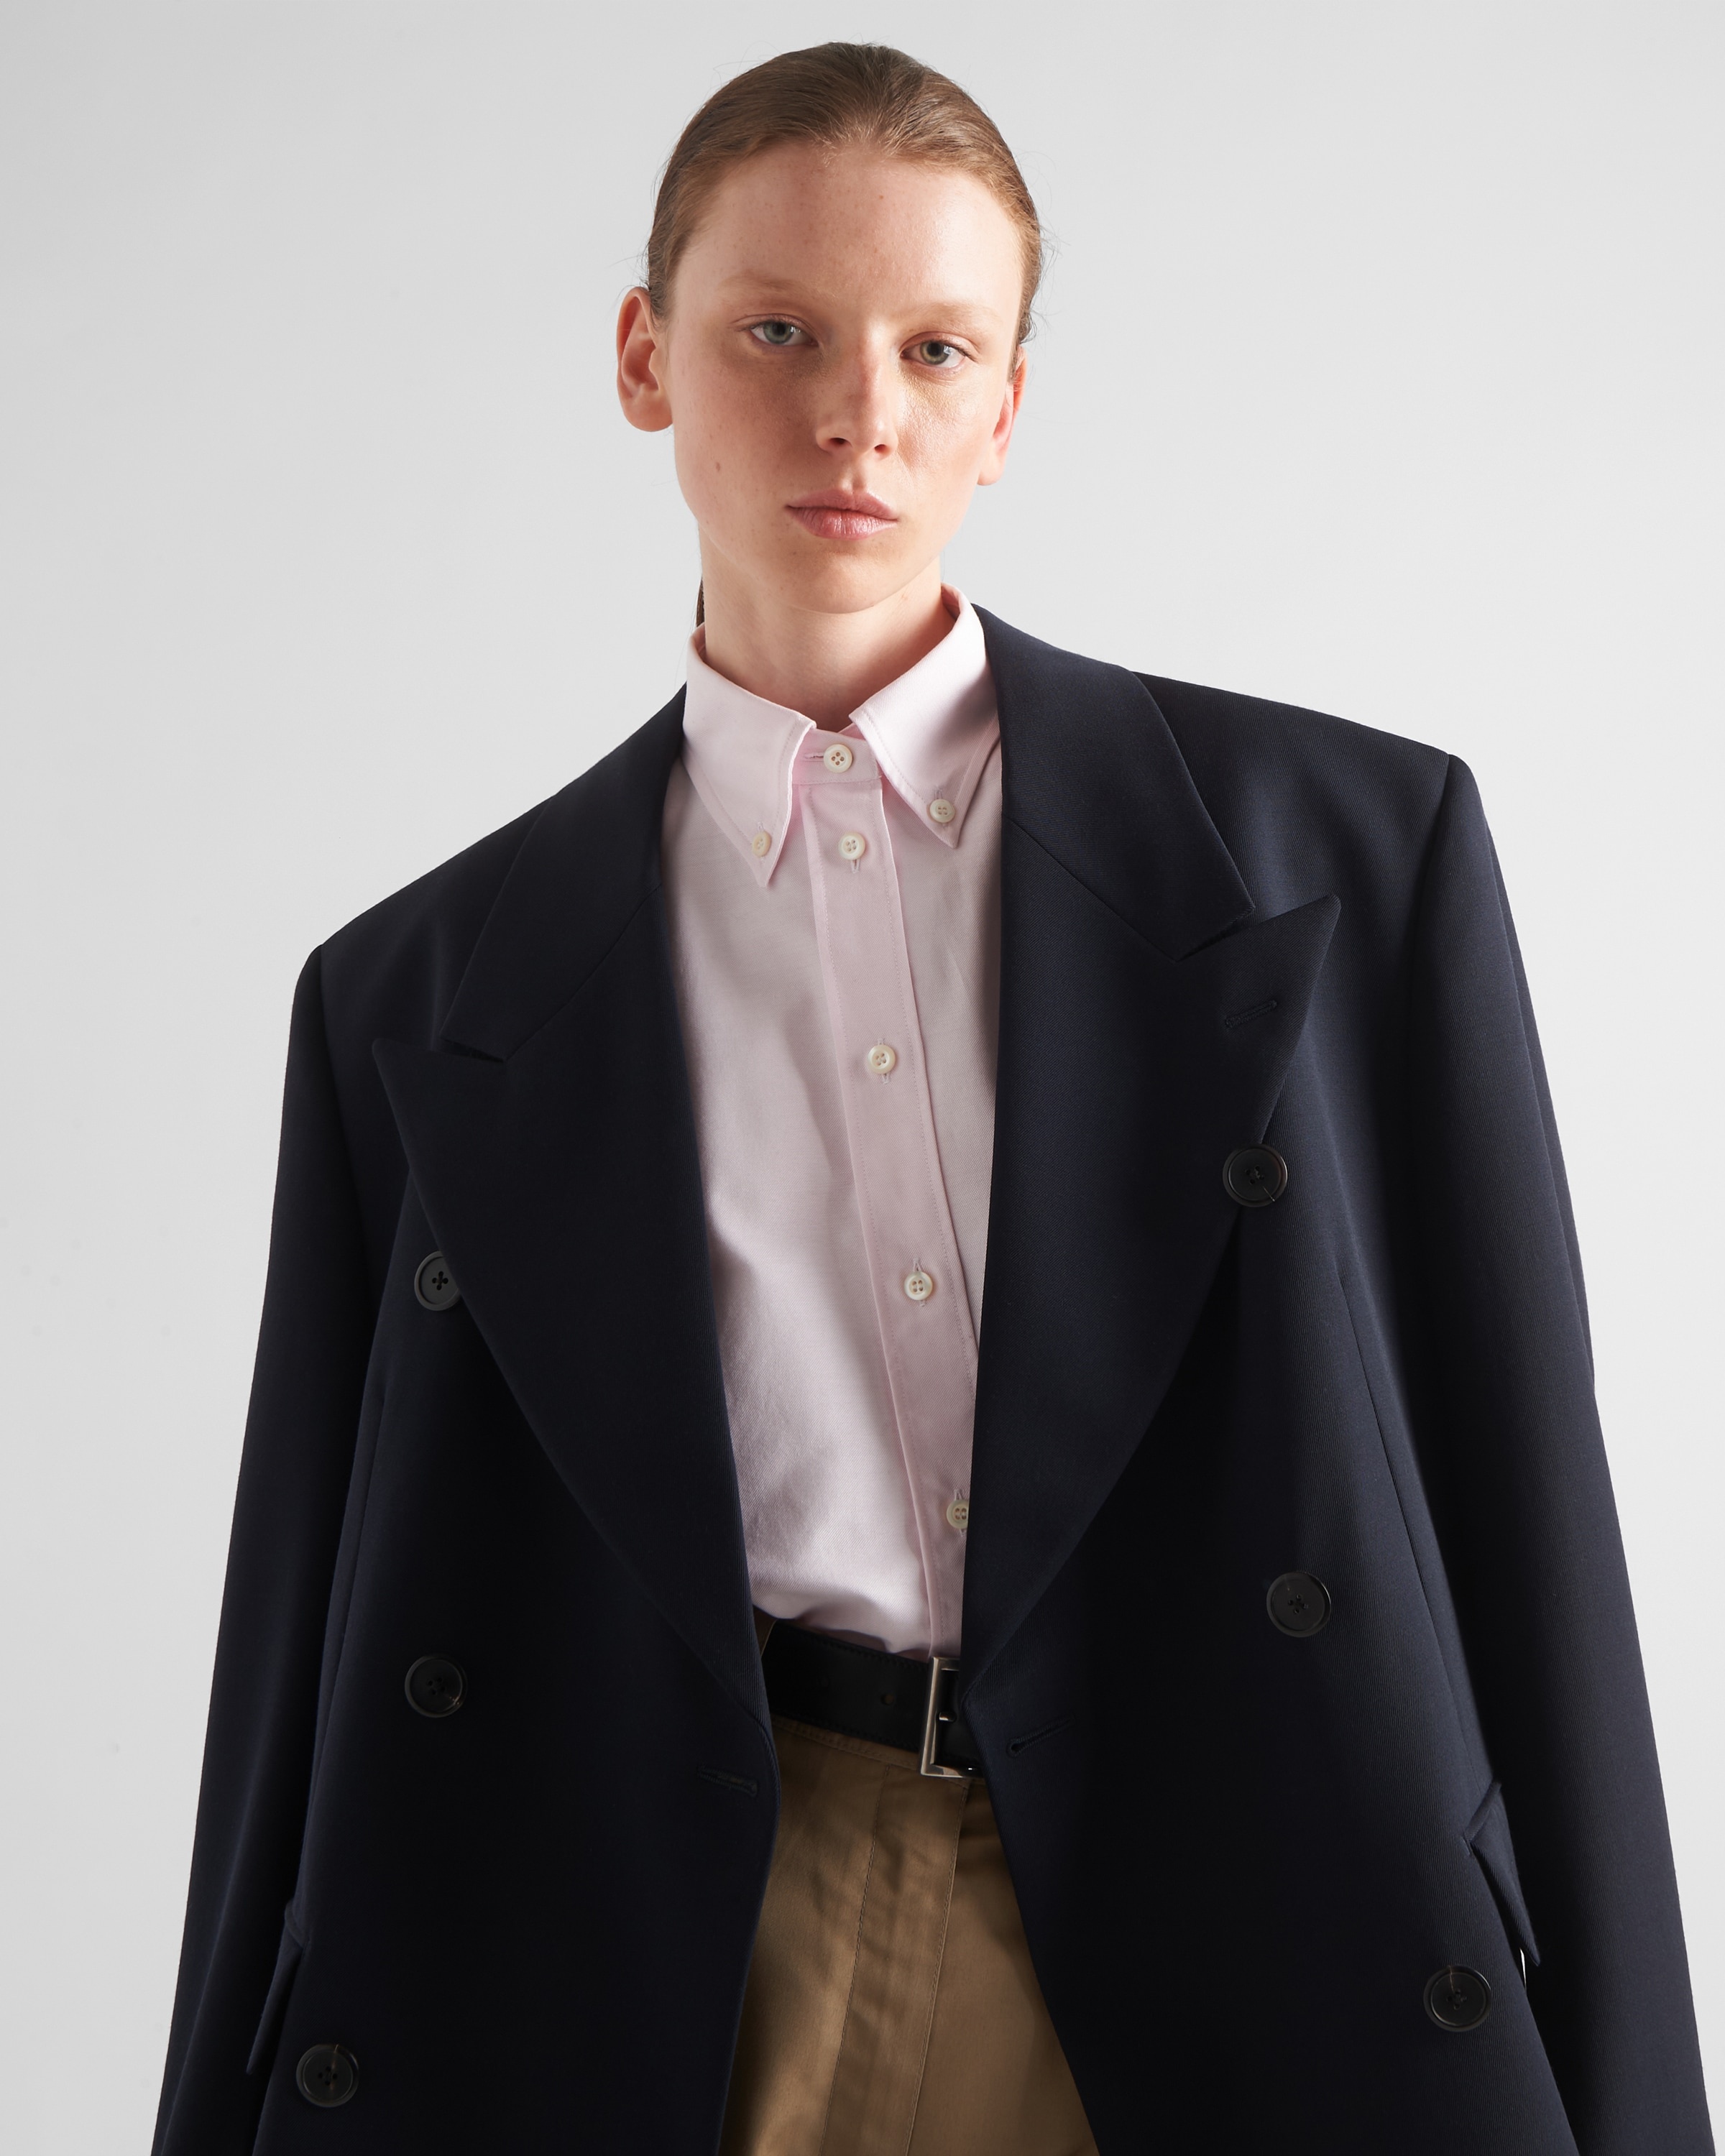 Prada Embroidered Oxford cotton shirt | REVERSIBLE